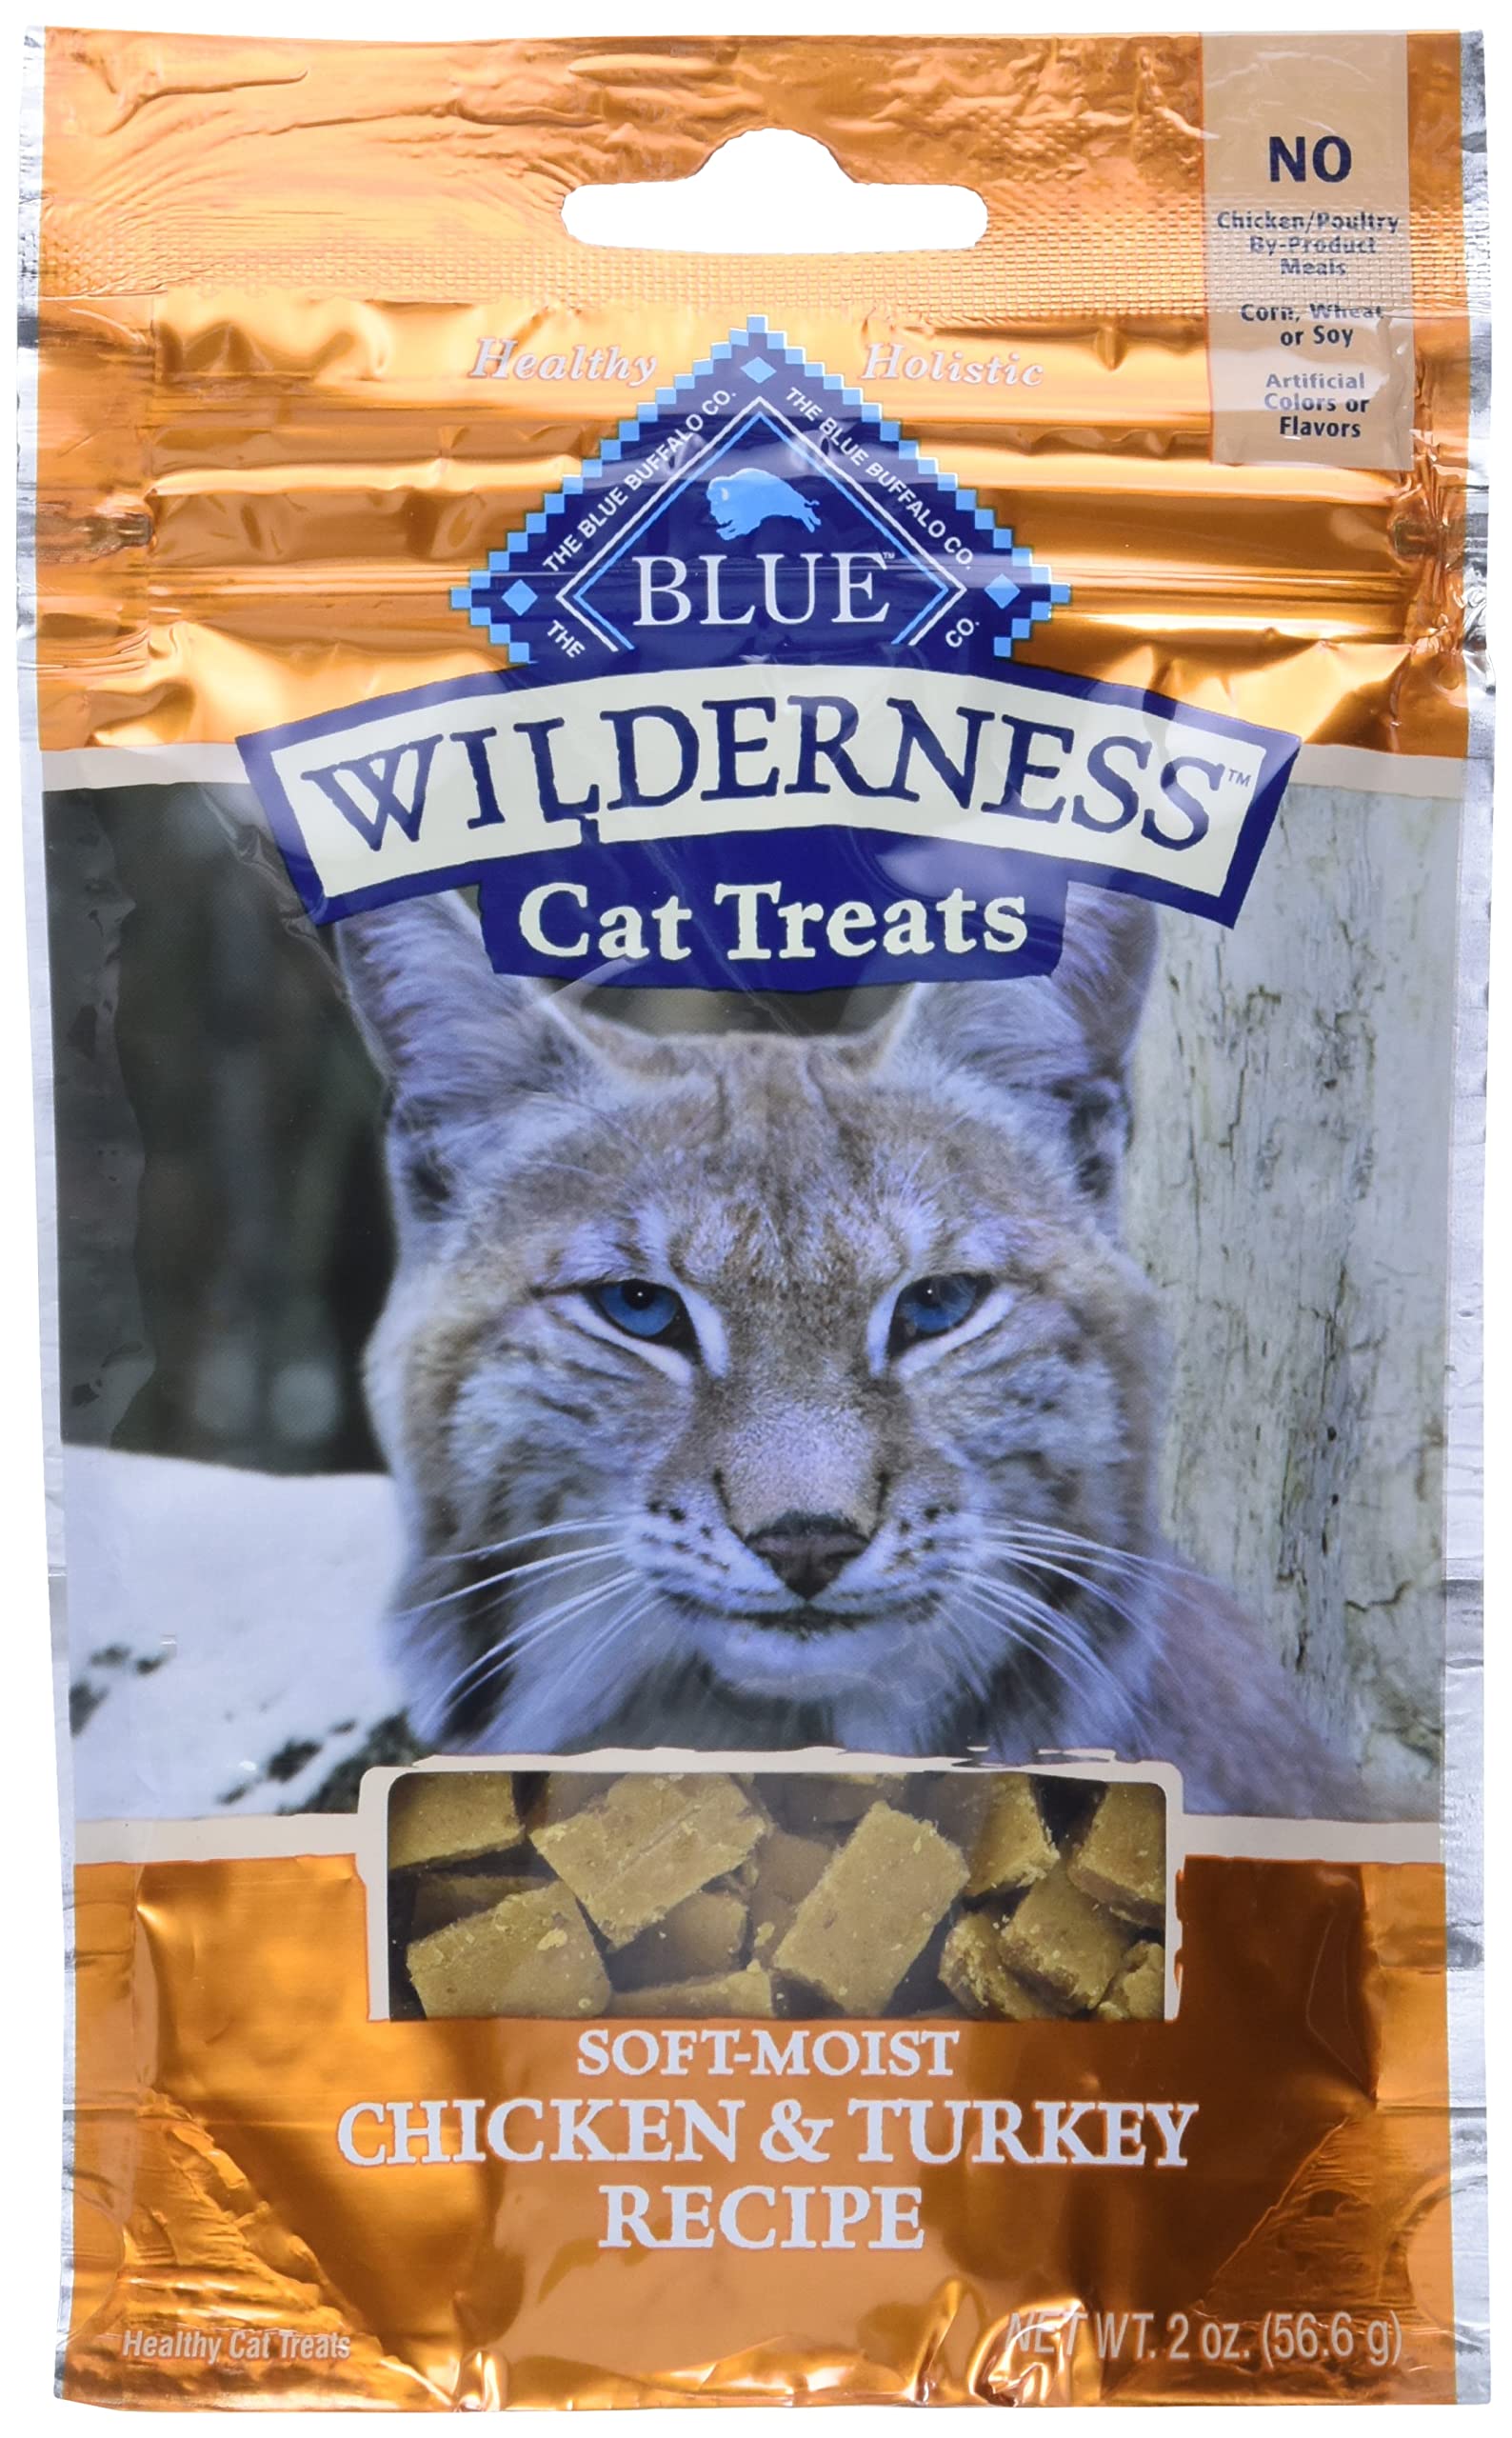 2-Oz Blue Buffalo Wilderness Grain Free Soft-Moist Cat Treats (Chicken & Turkey or Chicken & Salmon) 2 For $4.47 ($2.24 Each) w/ S&S + Free Shipping w/ Prime or on $35+